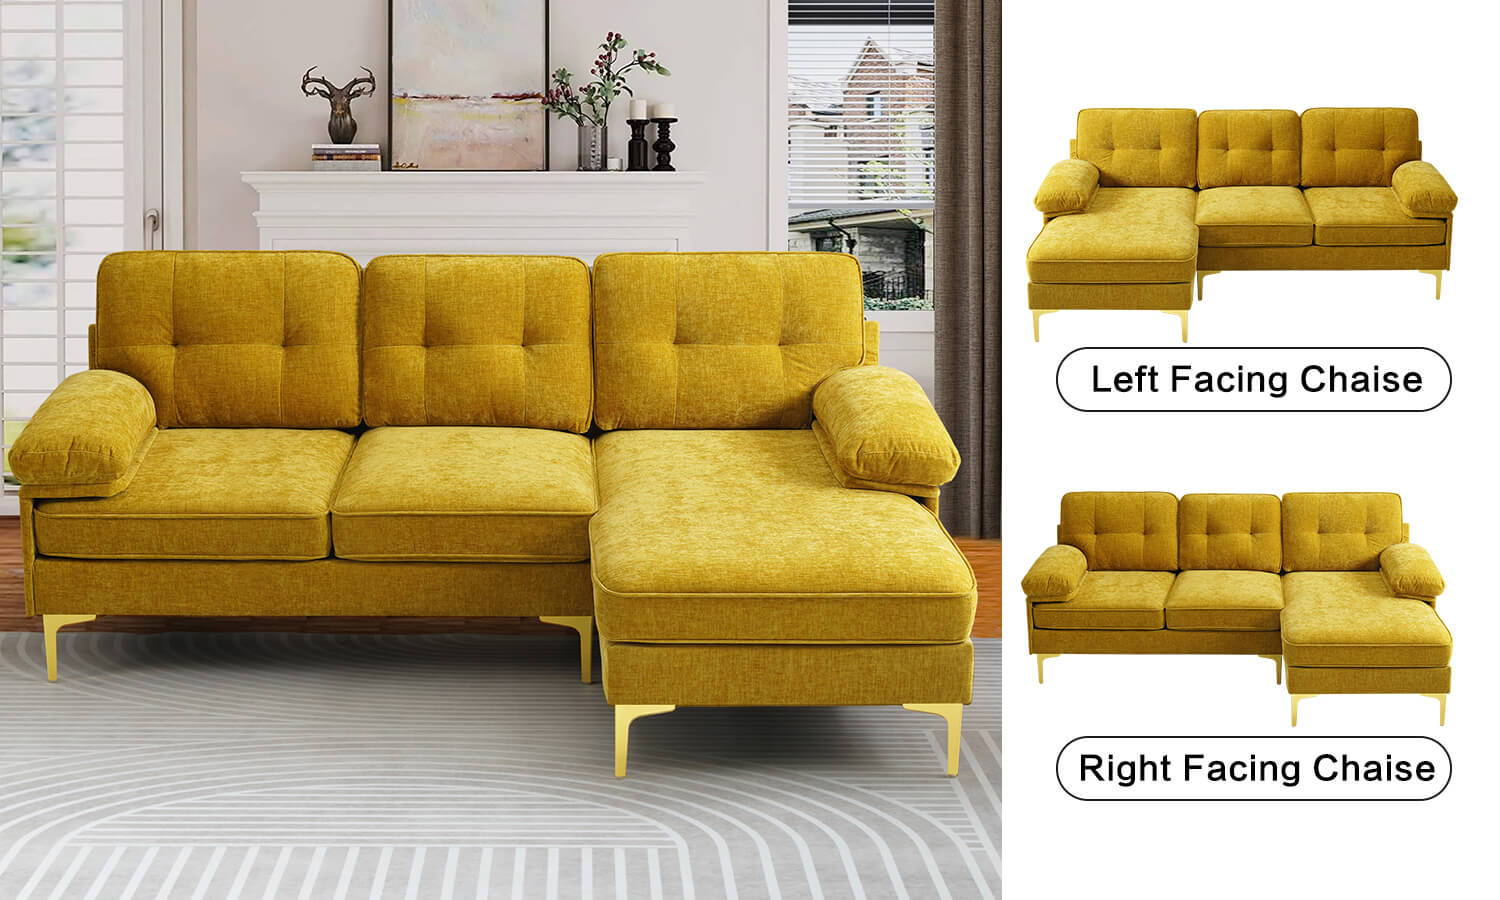 Asjmreye Sectional Sofa Couch, L Shaped Sofa, Modern Chenille fabric, Golden